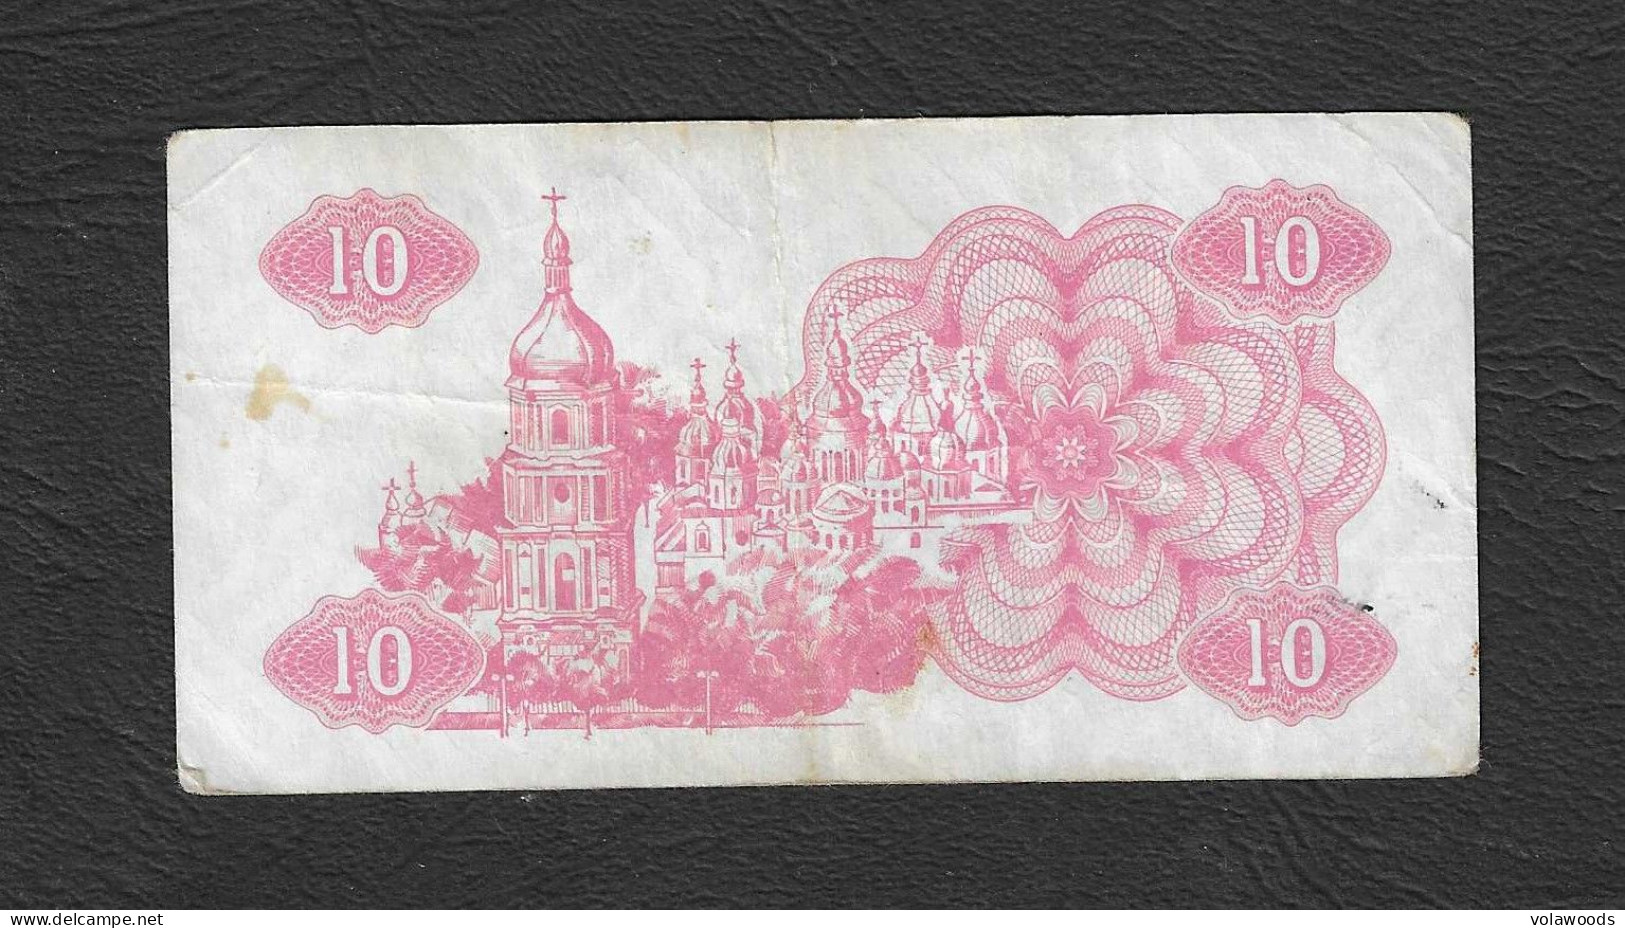 Ucraina - Banconota Circolata Da 10 Karbovantes P-84a - 1991 #19 - Ucraina